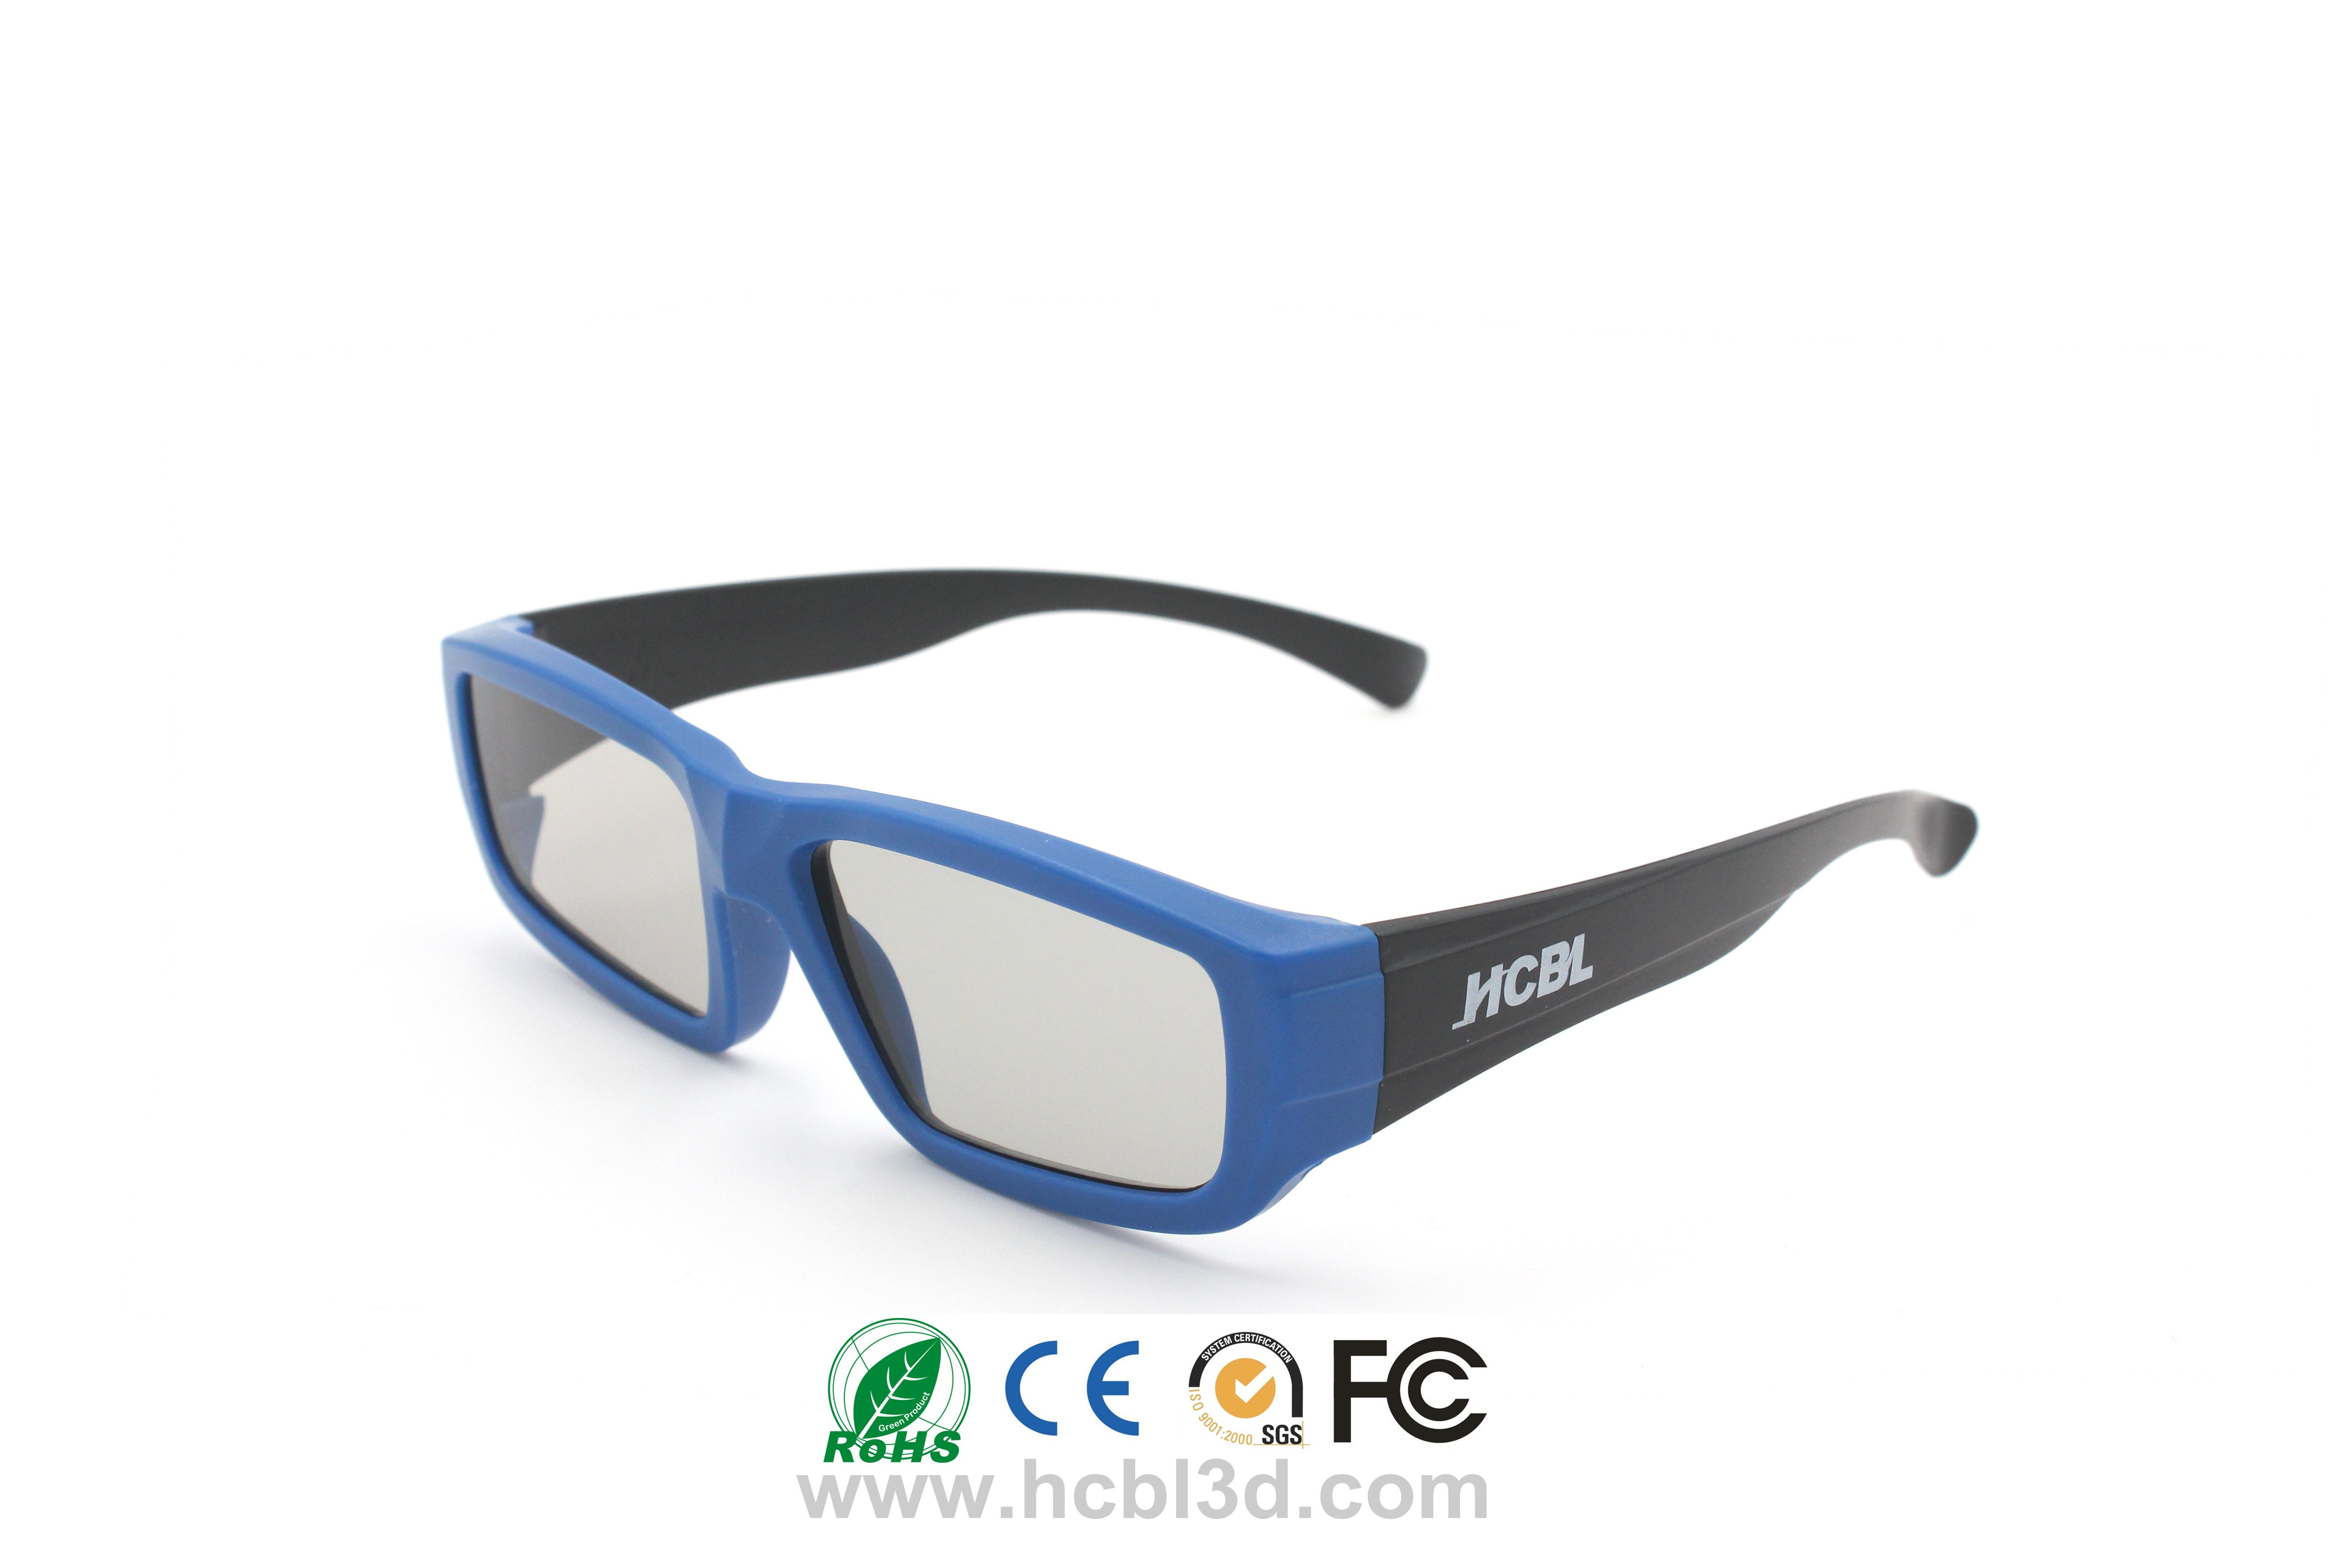 3D-Brille in Kindergröße, recycelbar, polarisierte 3D-Kinobrille